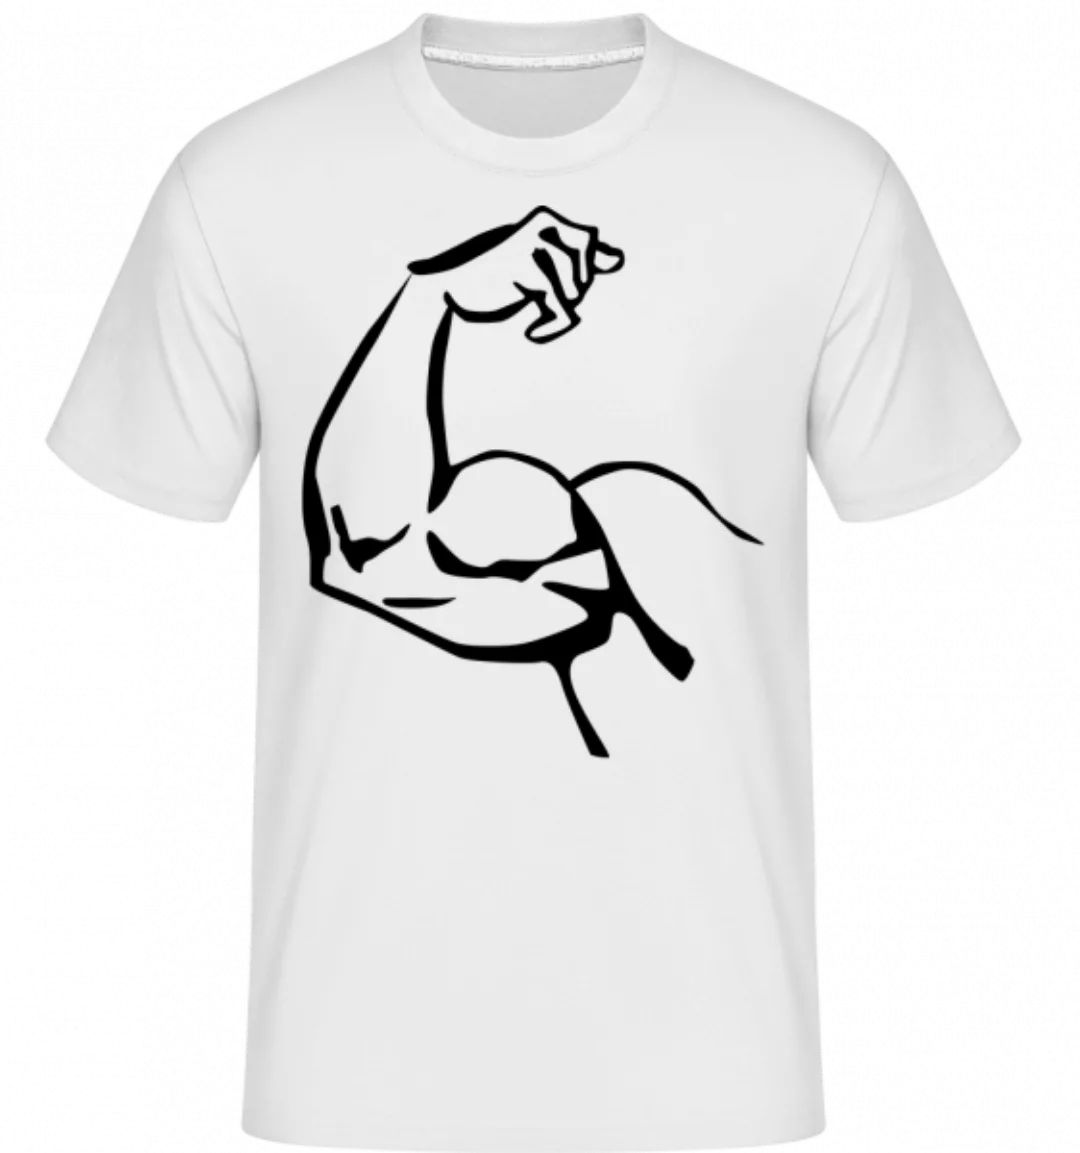 Muscles - Schwarz/Weiß · Shirtinator Männer T-Shirt günstig online kaufen